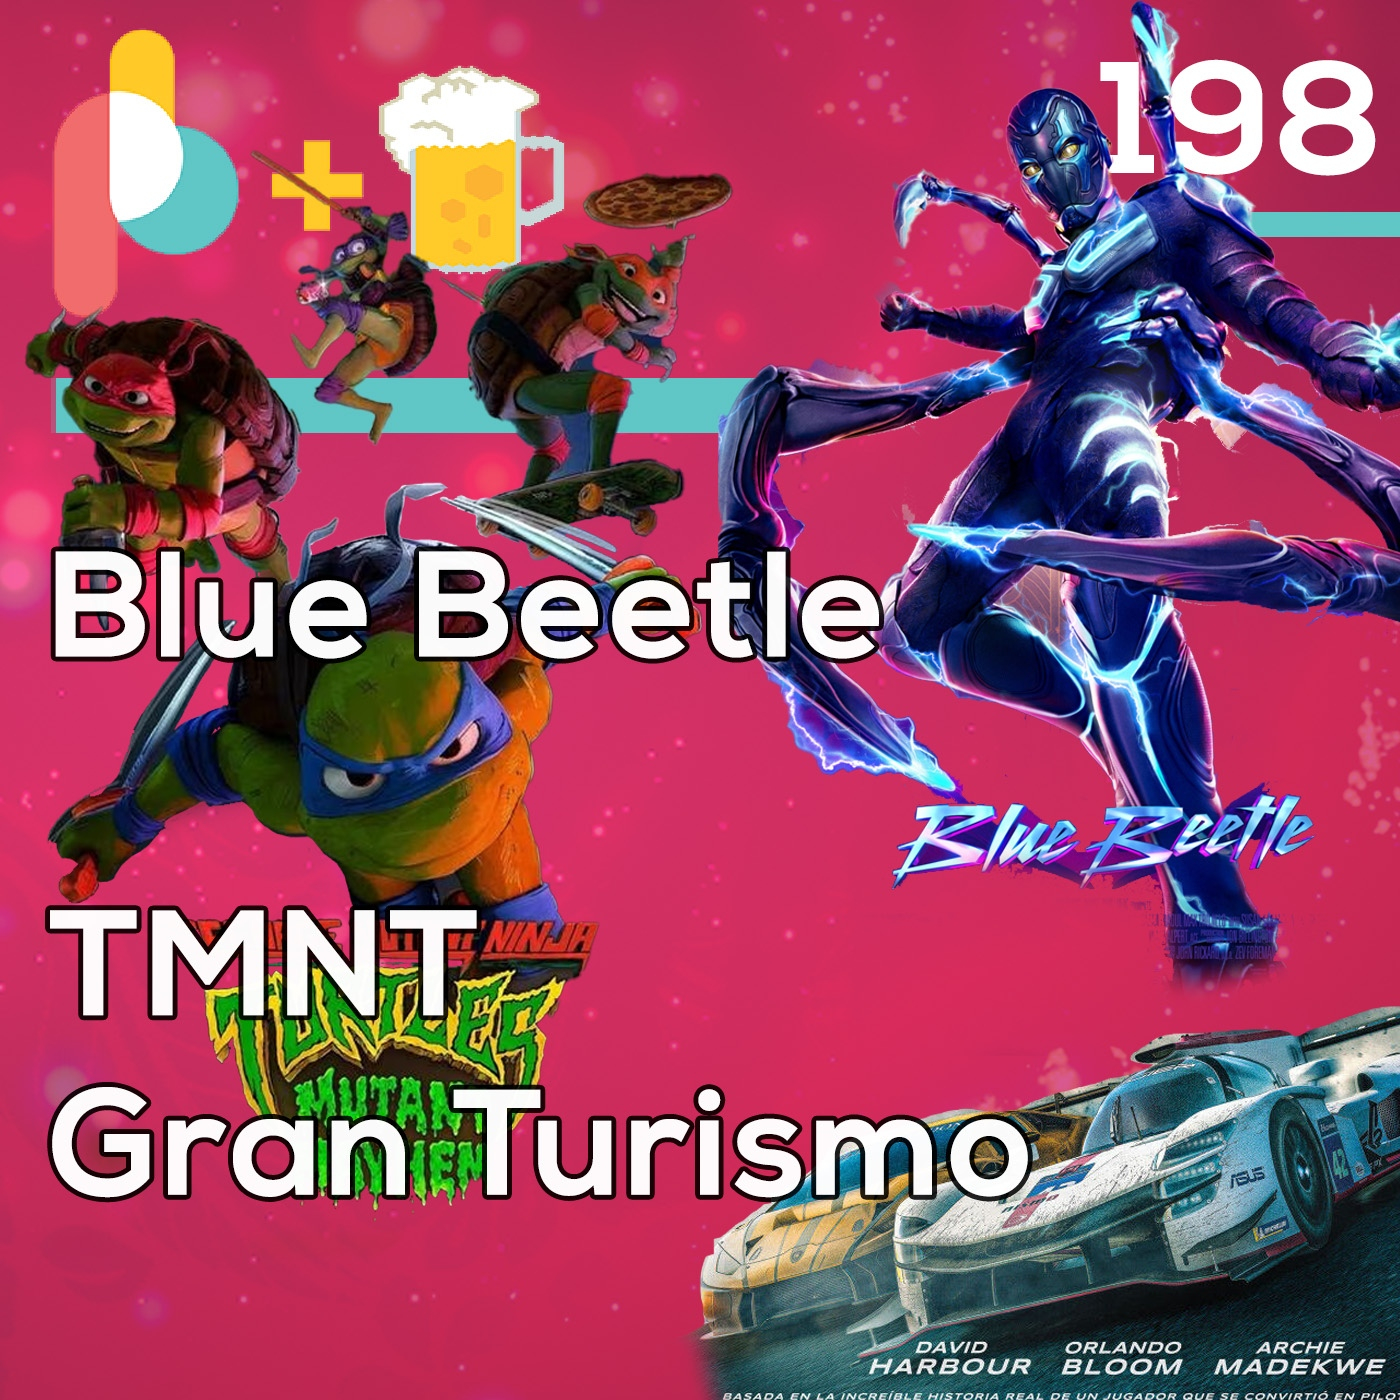 Pixelbits con cerveza 198: Mucho cine! Blue Beetle! TMNT Caos Mutante! Gran Turismo!